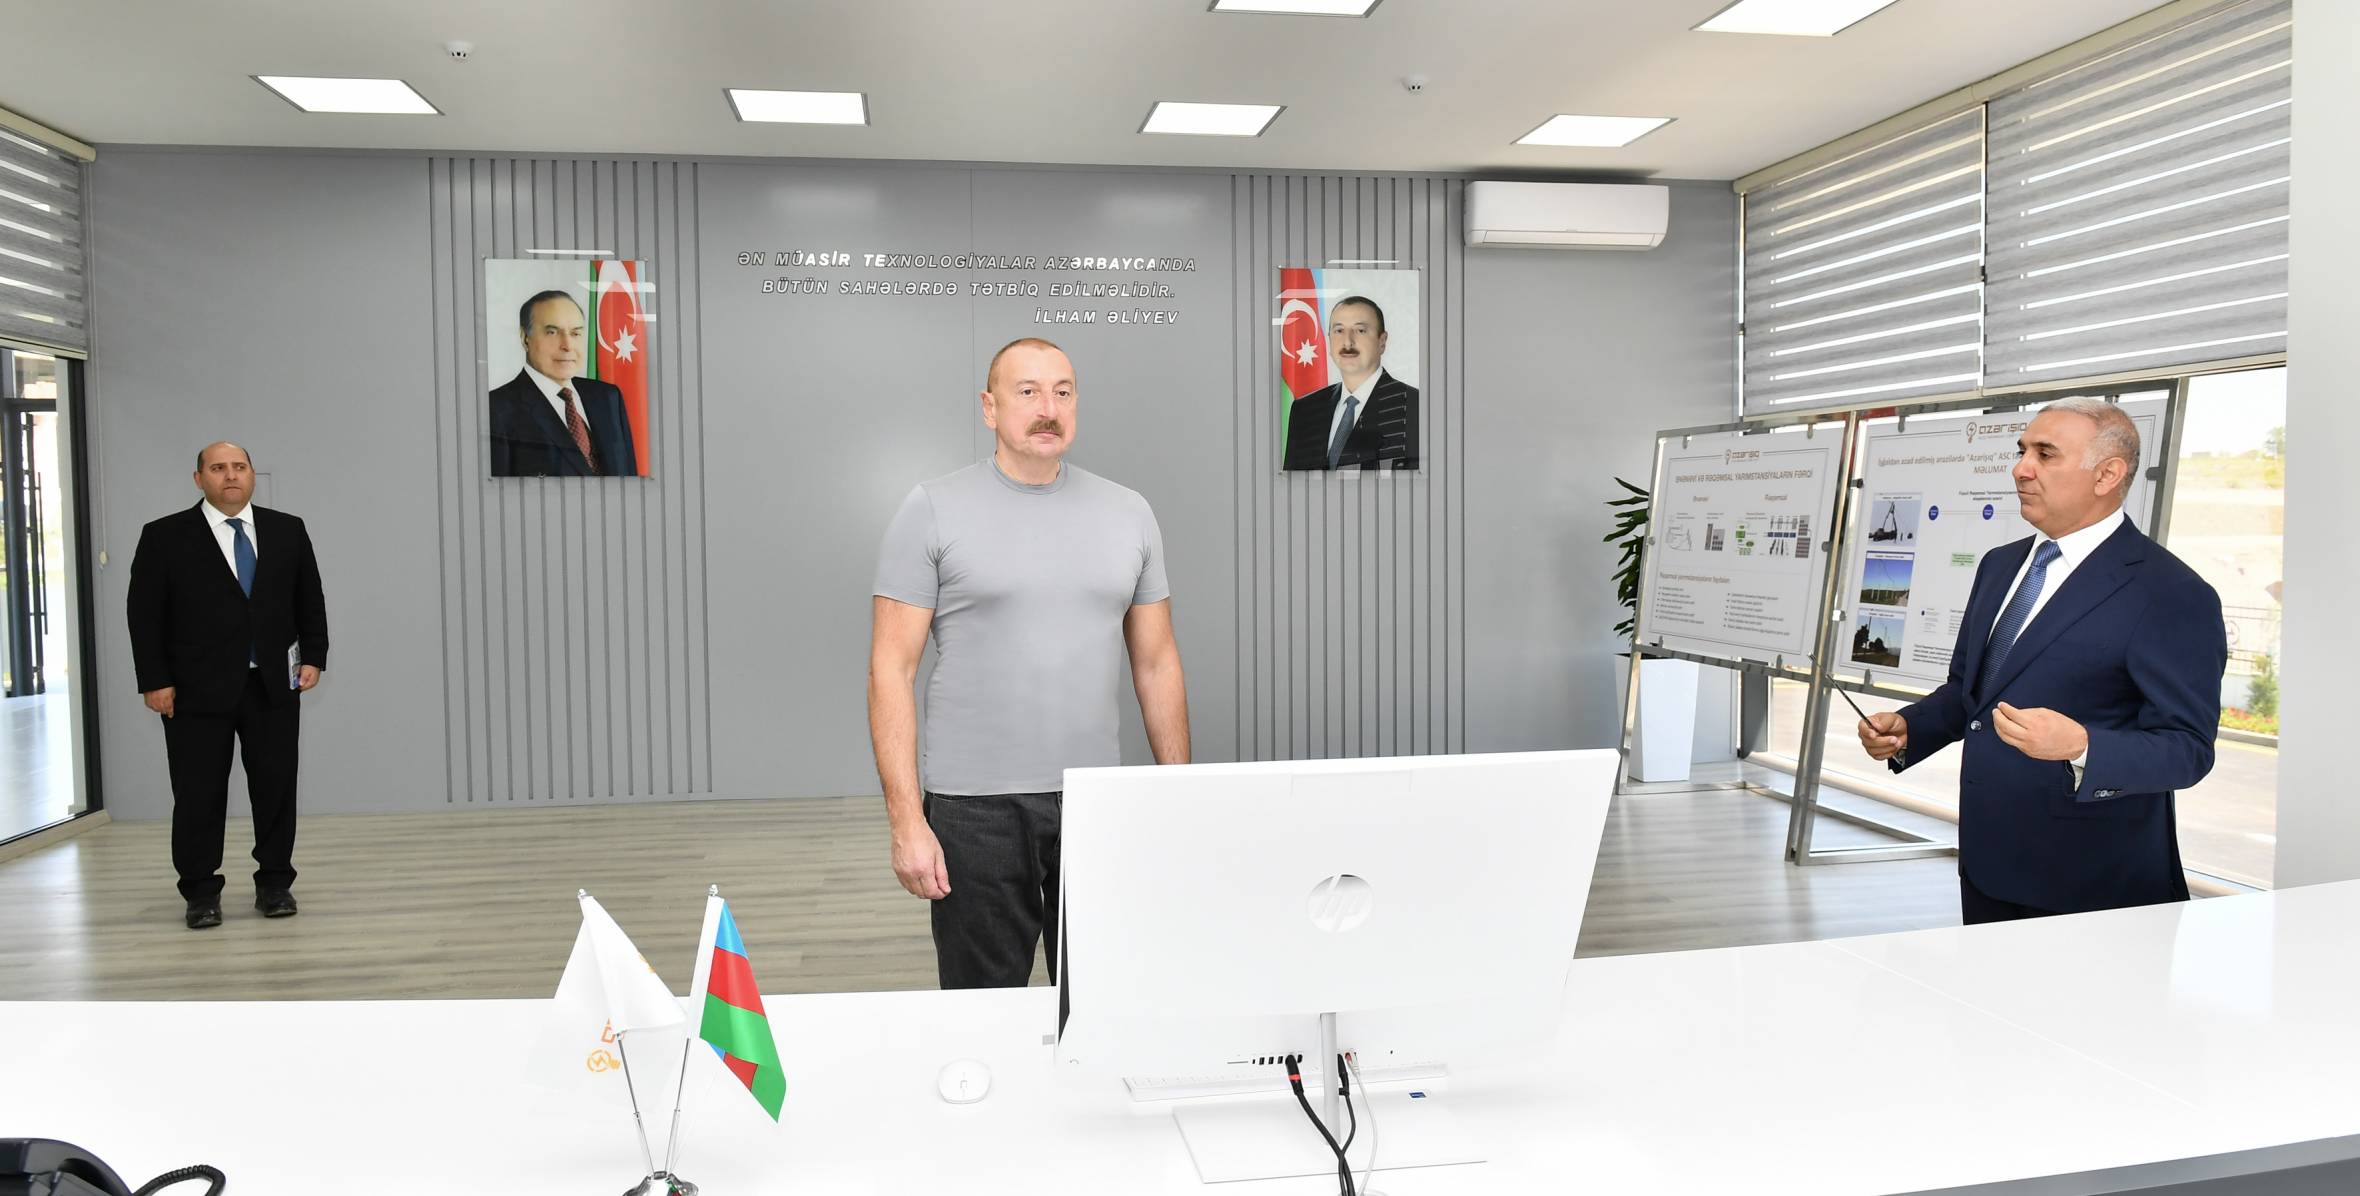 Ilham Aliyev has inaugurated the Fuzuli Digital Substation and Management Center owned by “Azerishig” OJSC